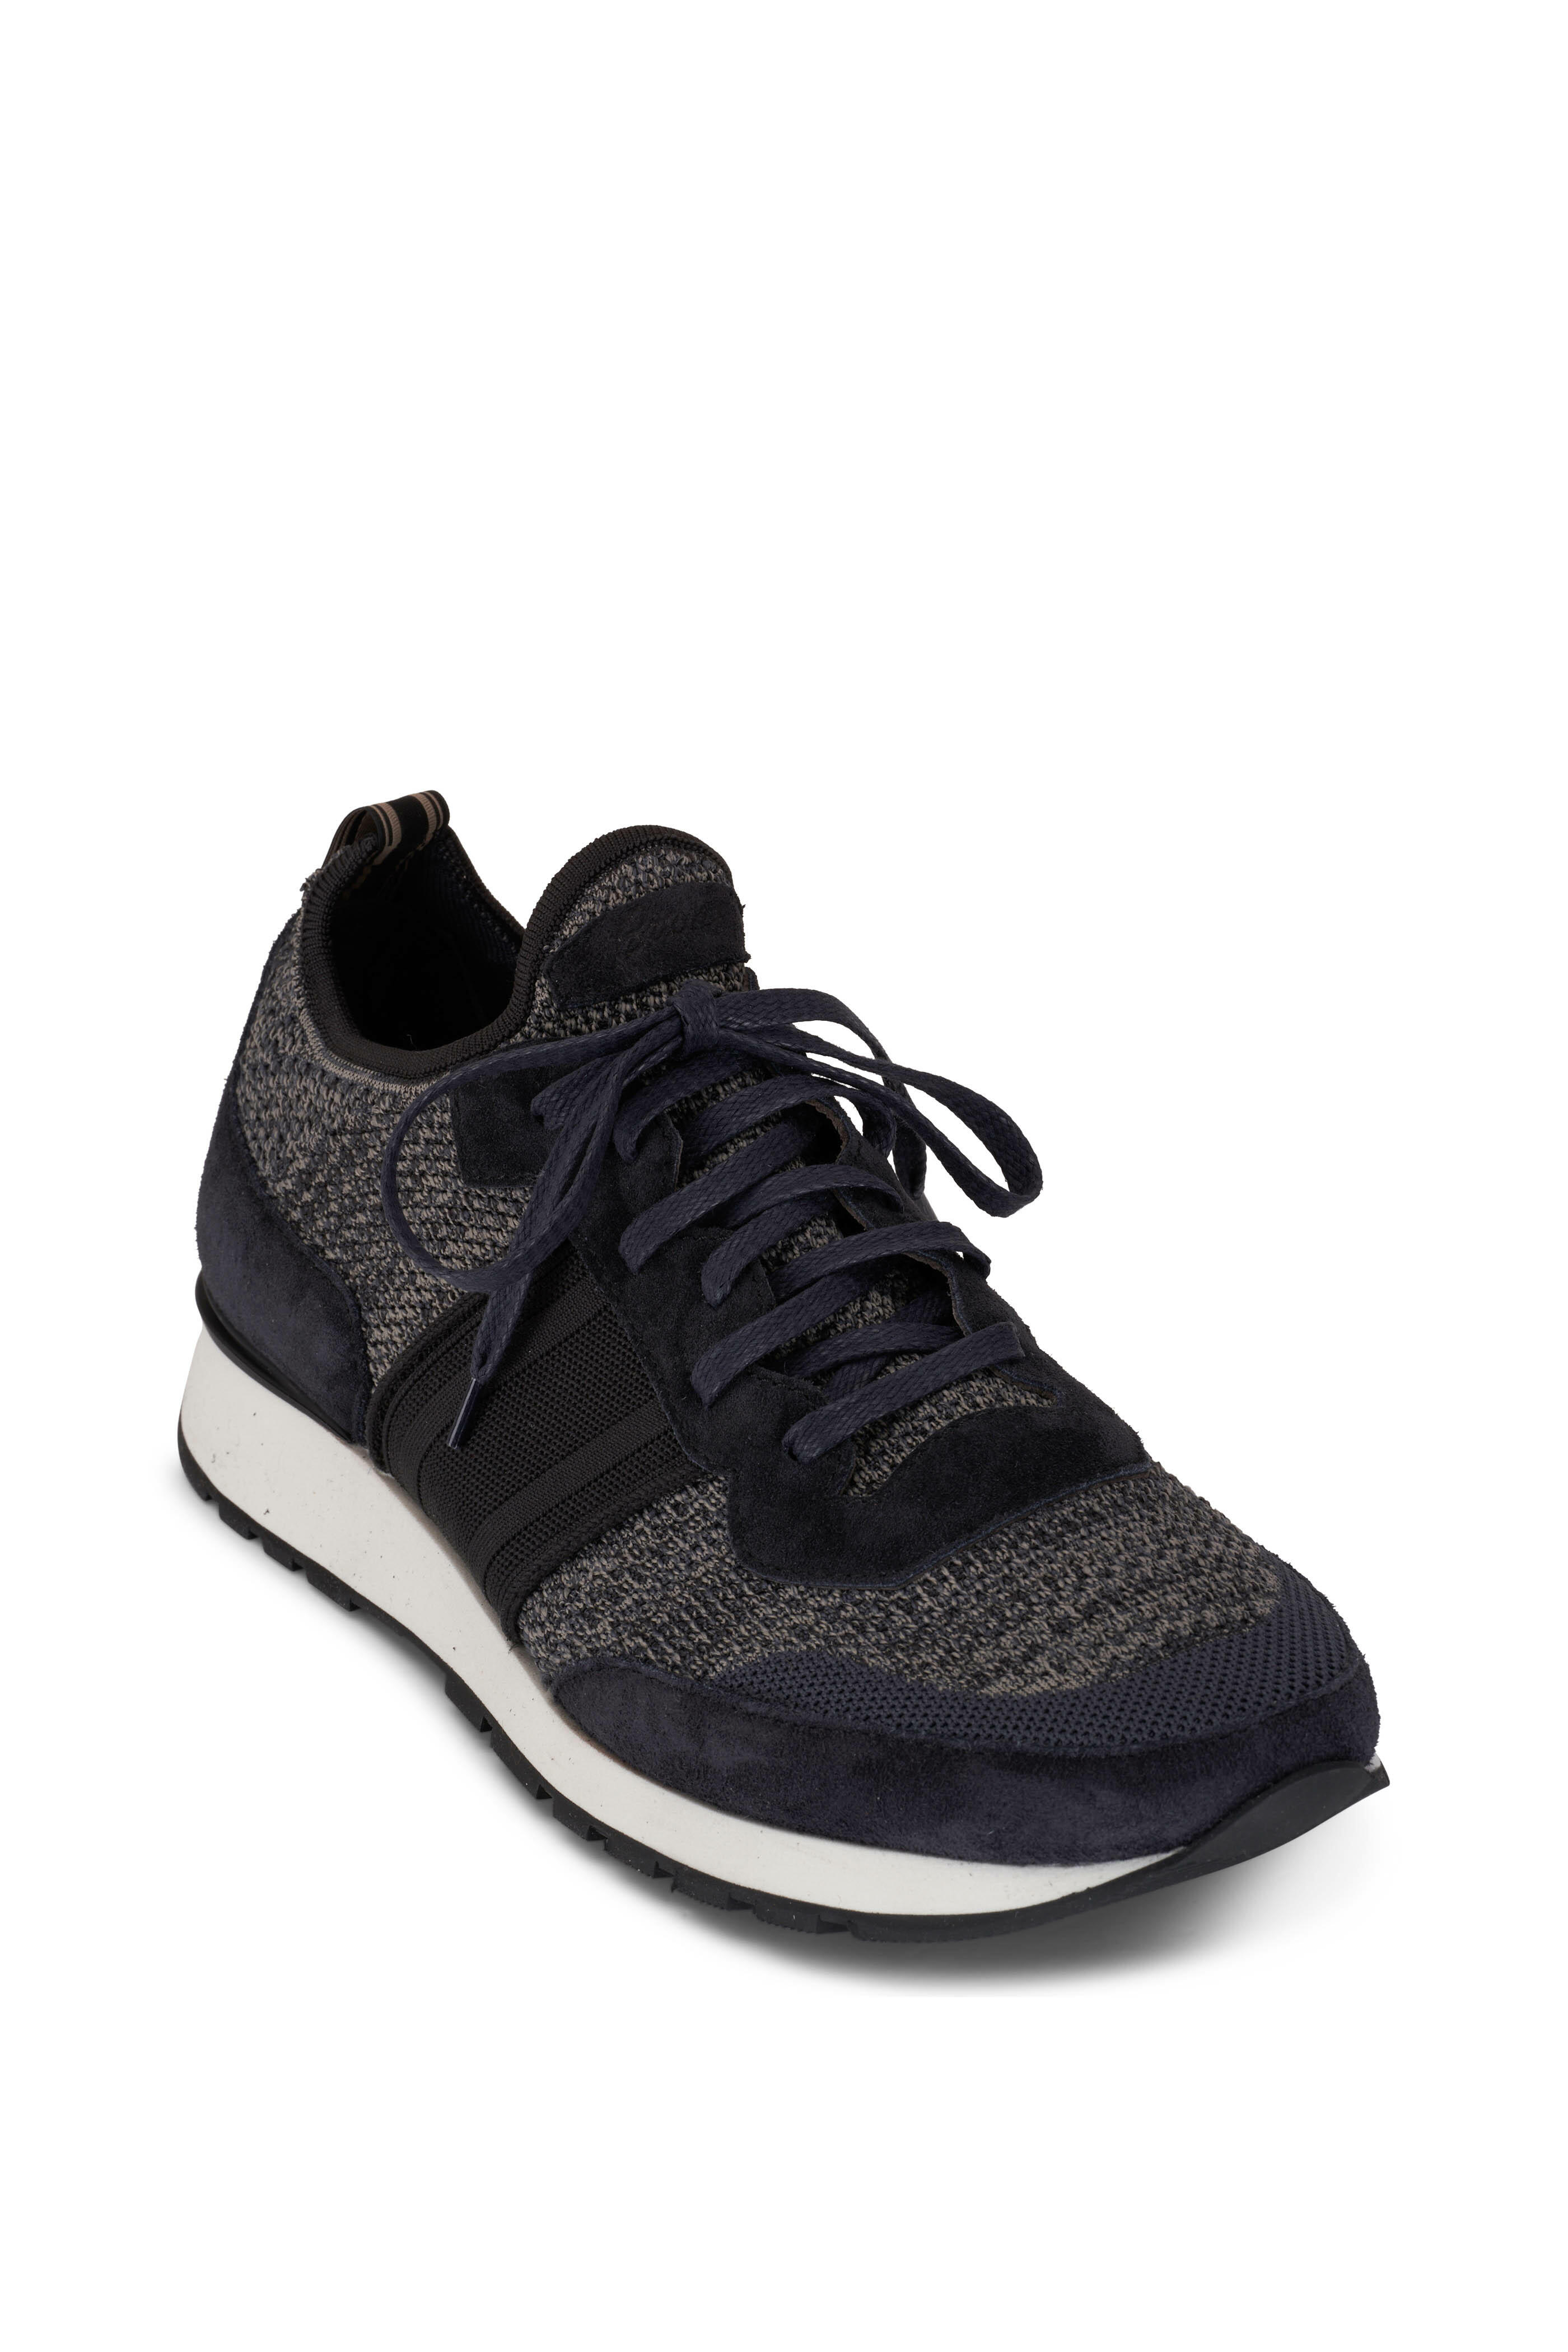 verraden Eed open haard Brioni - Graphite & Midnight Running Sneaker | Mitchell Stores